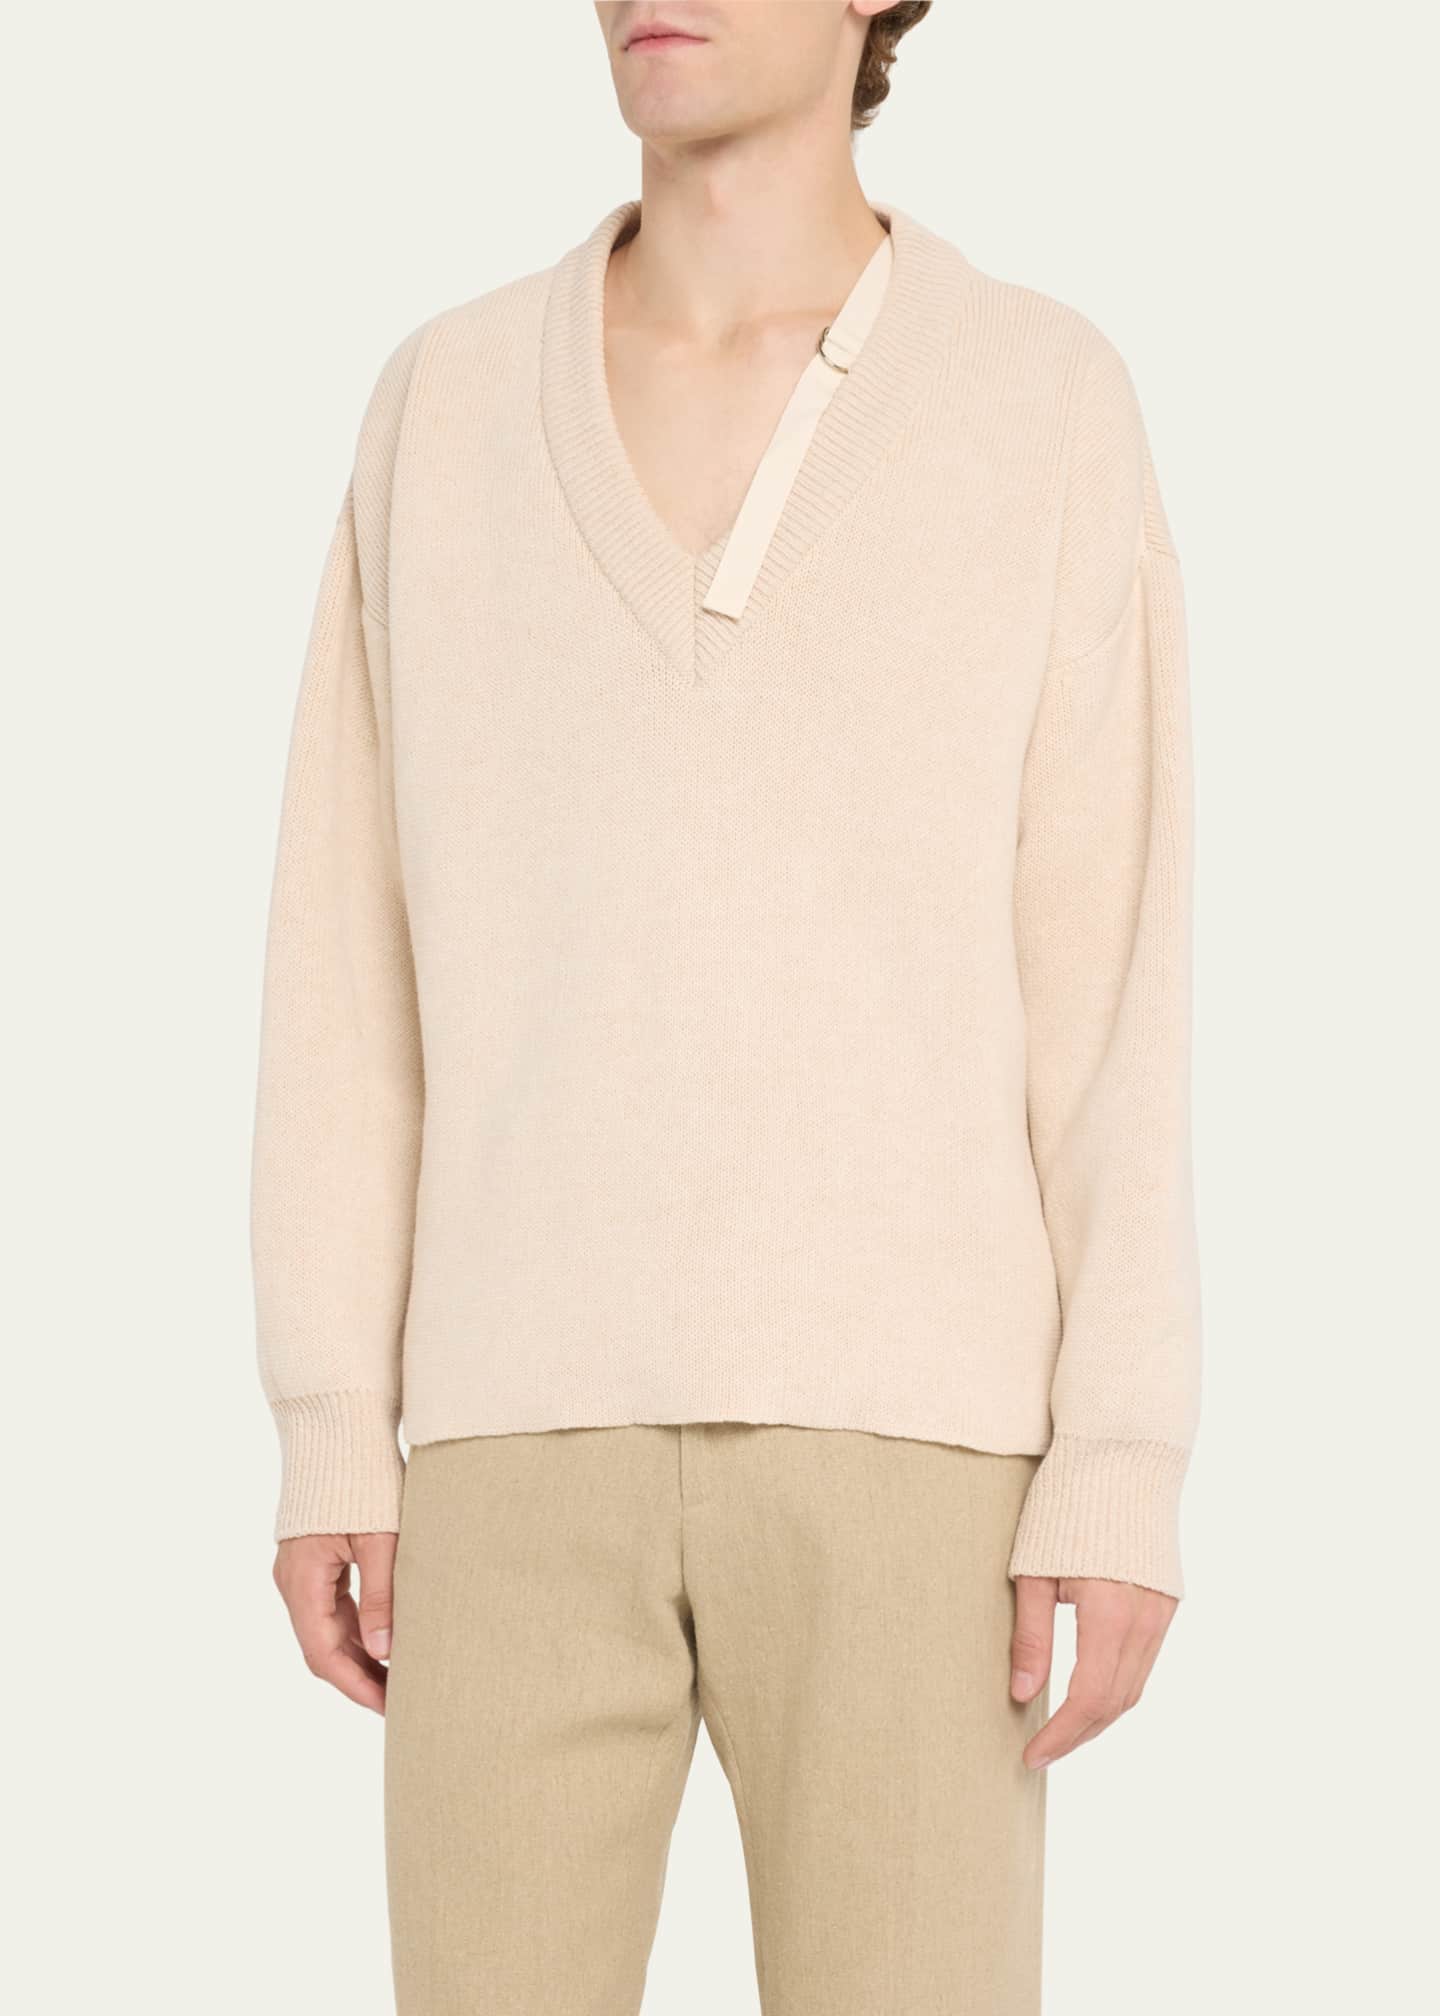 Jacquemus Men's V-Neck Sweater with Shoulder Strap - Bergdorf Goodman